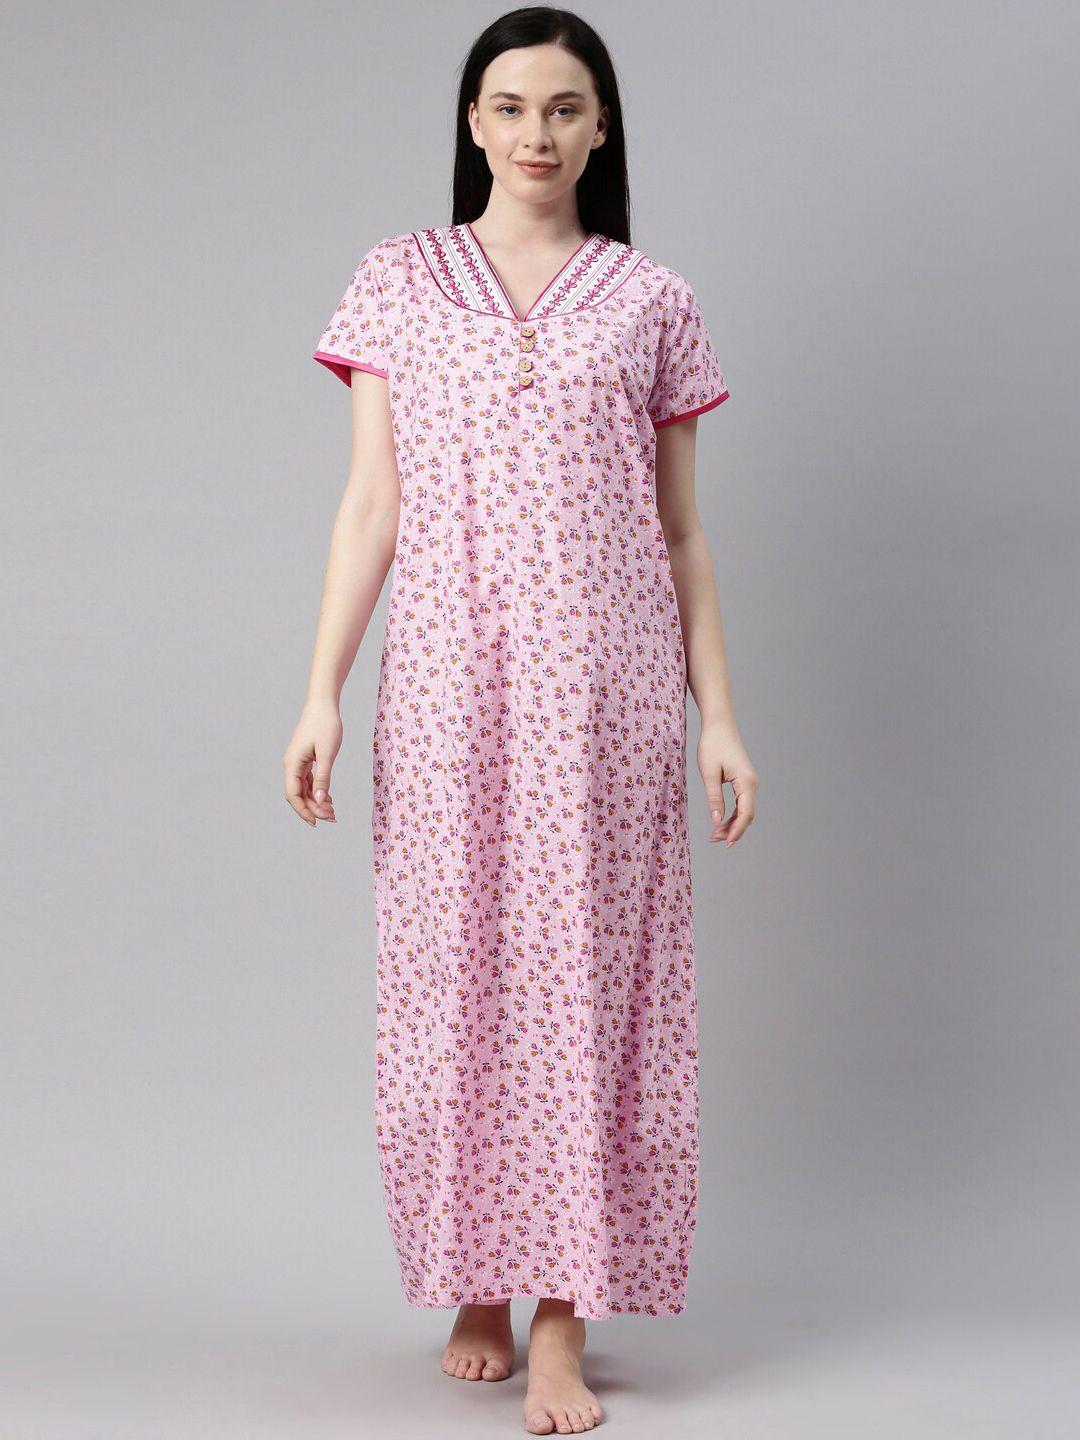 bailey-sells-pink-printed-maxi-nightdress